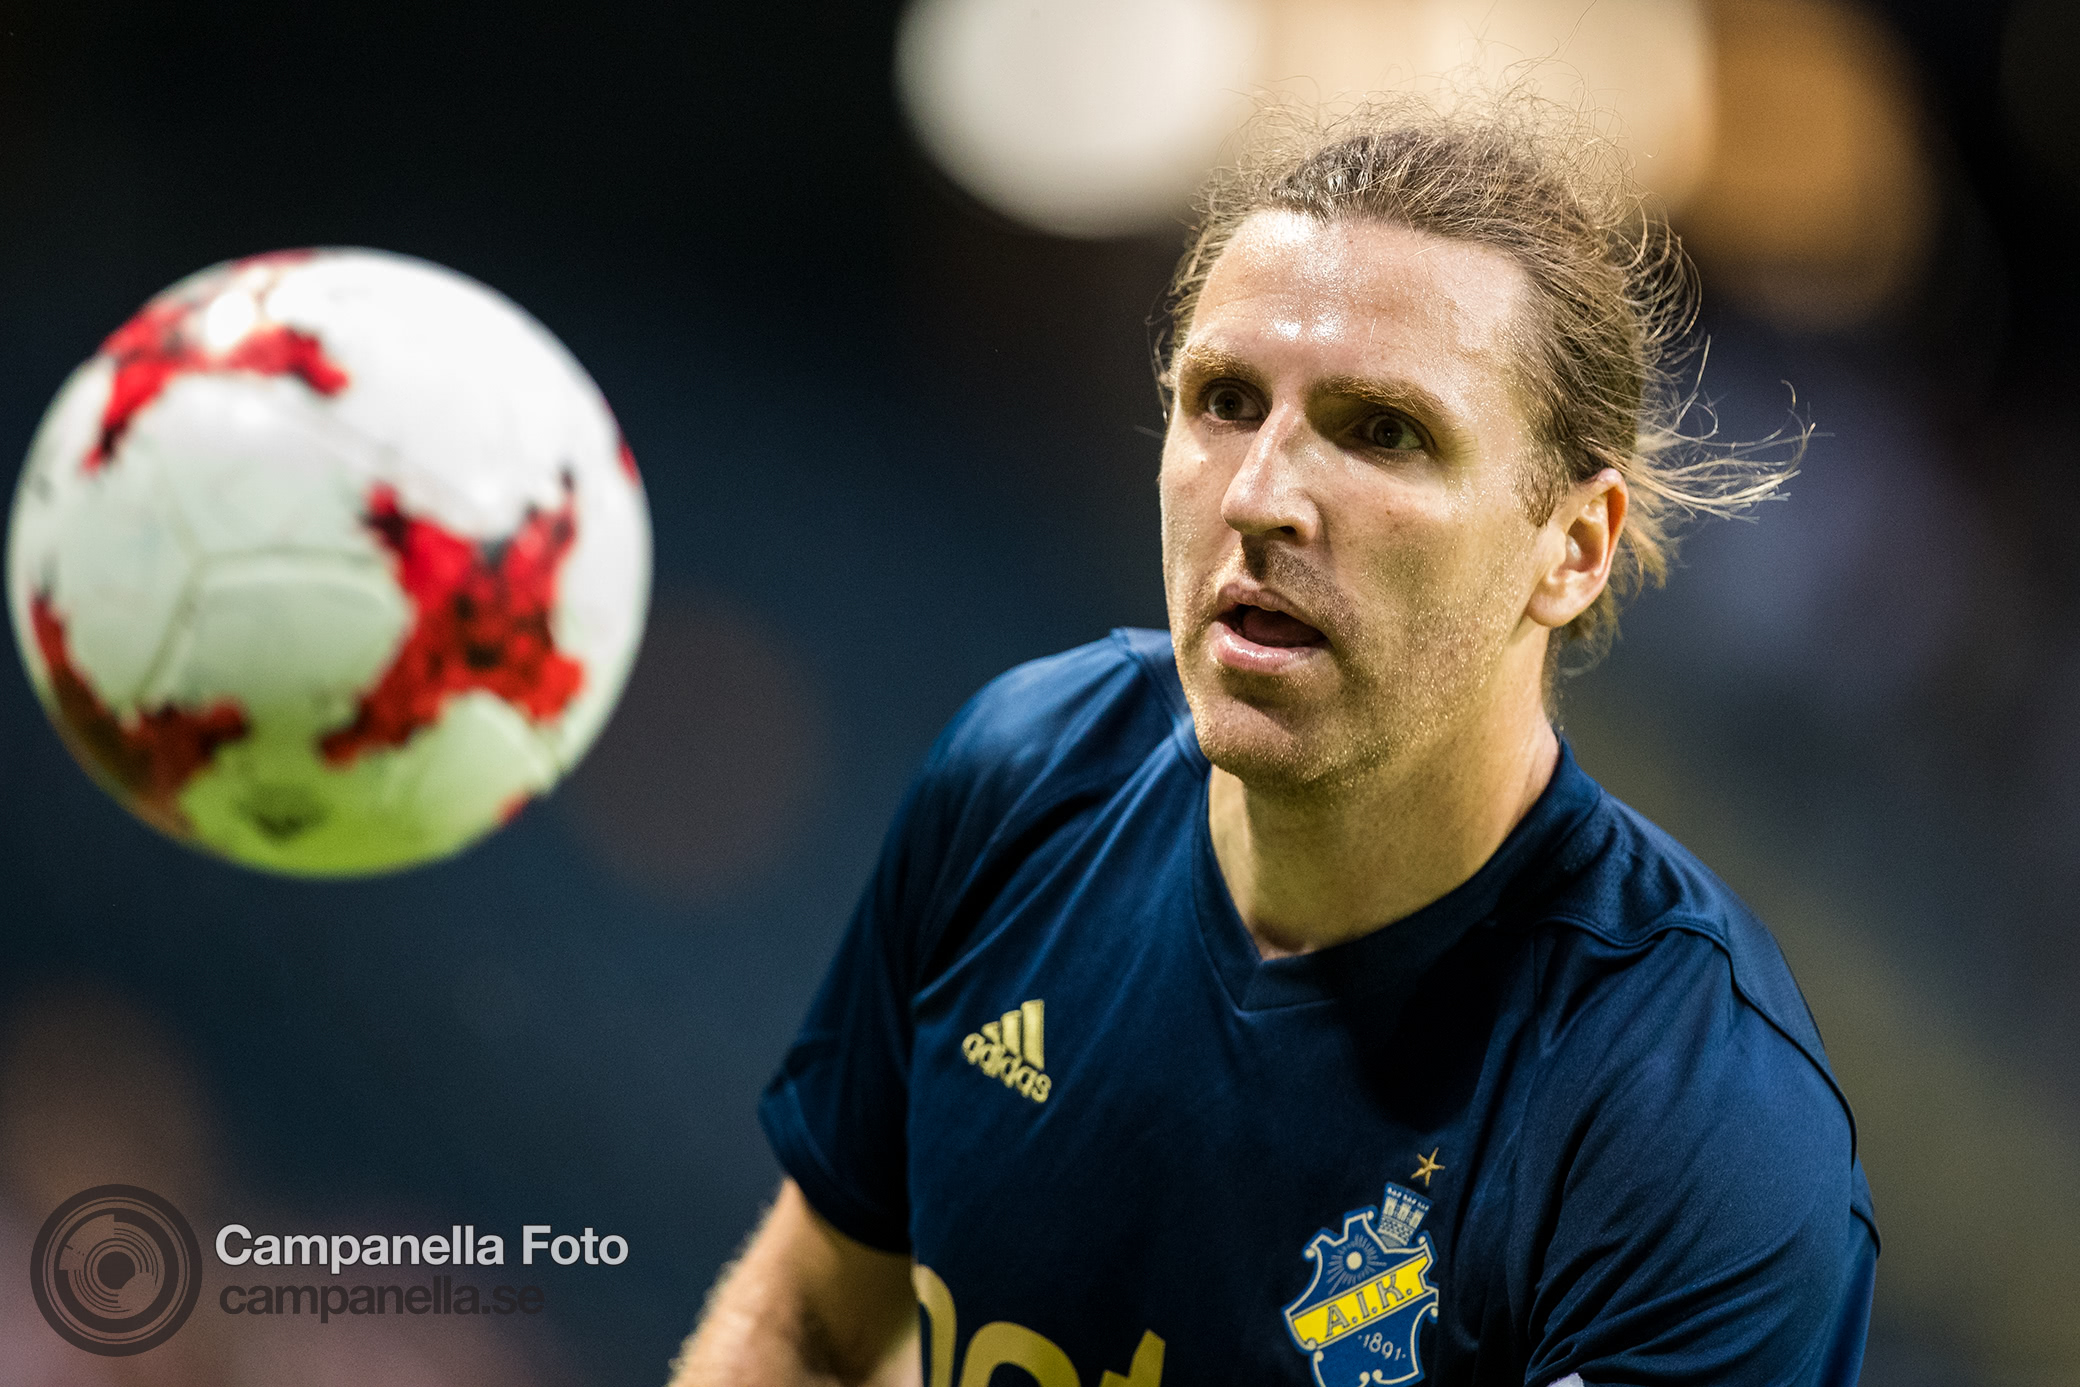 Sundgren penalty keeps hope alive for AIK - Michael Campanella Photography